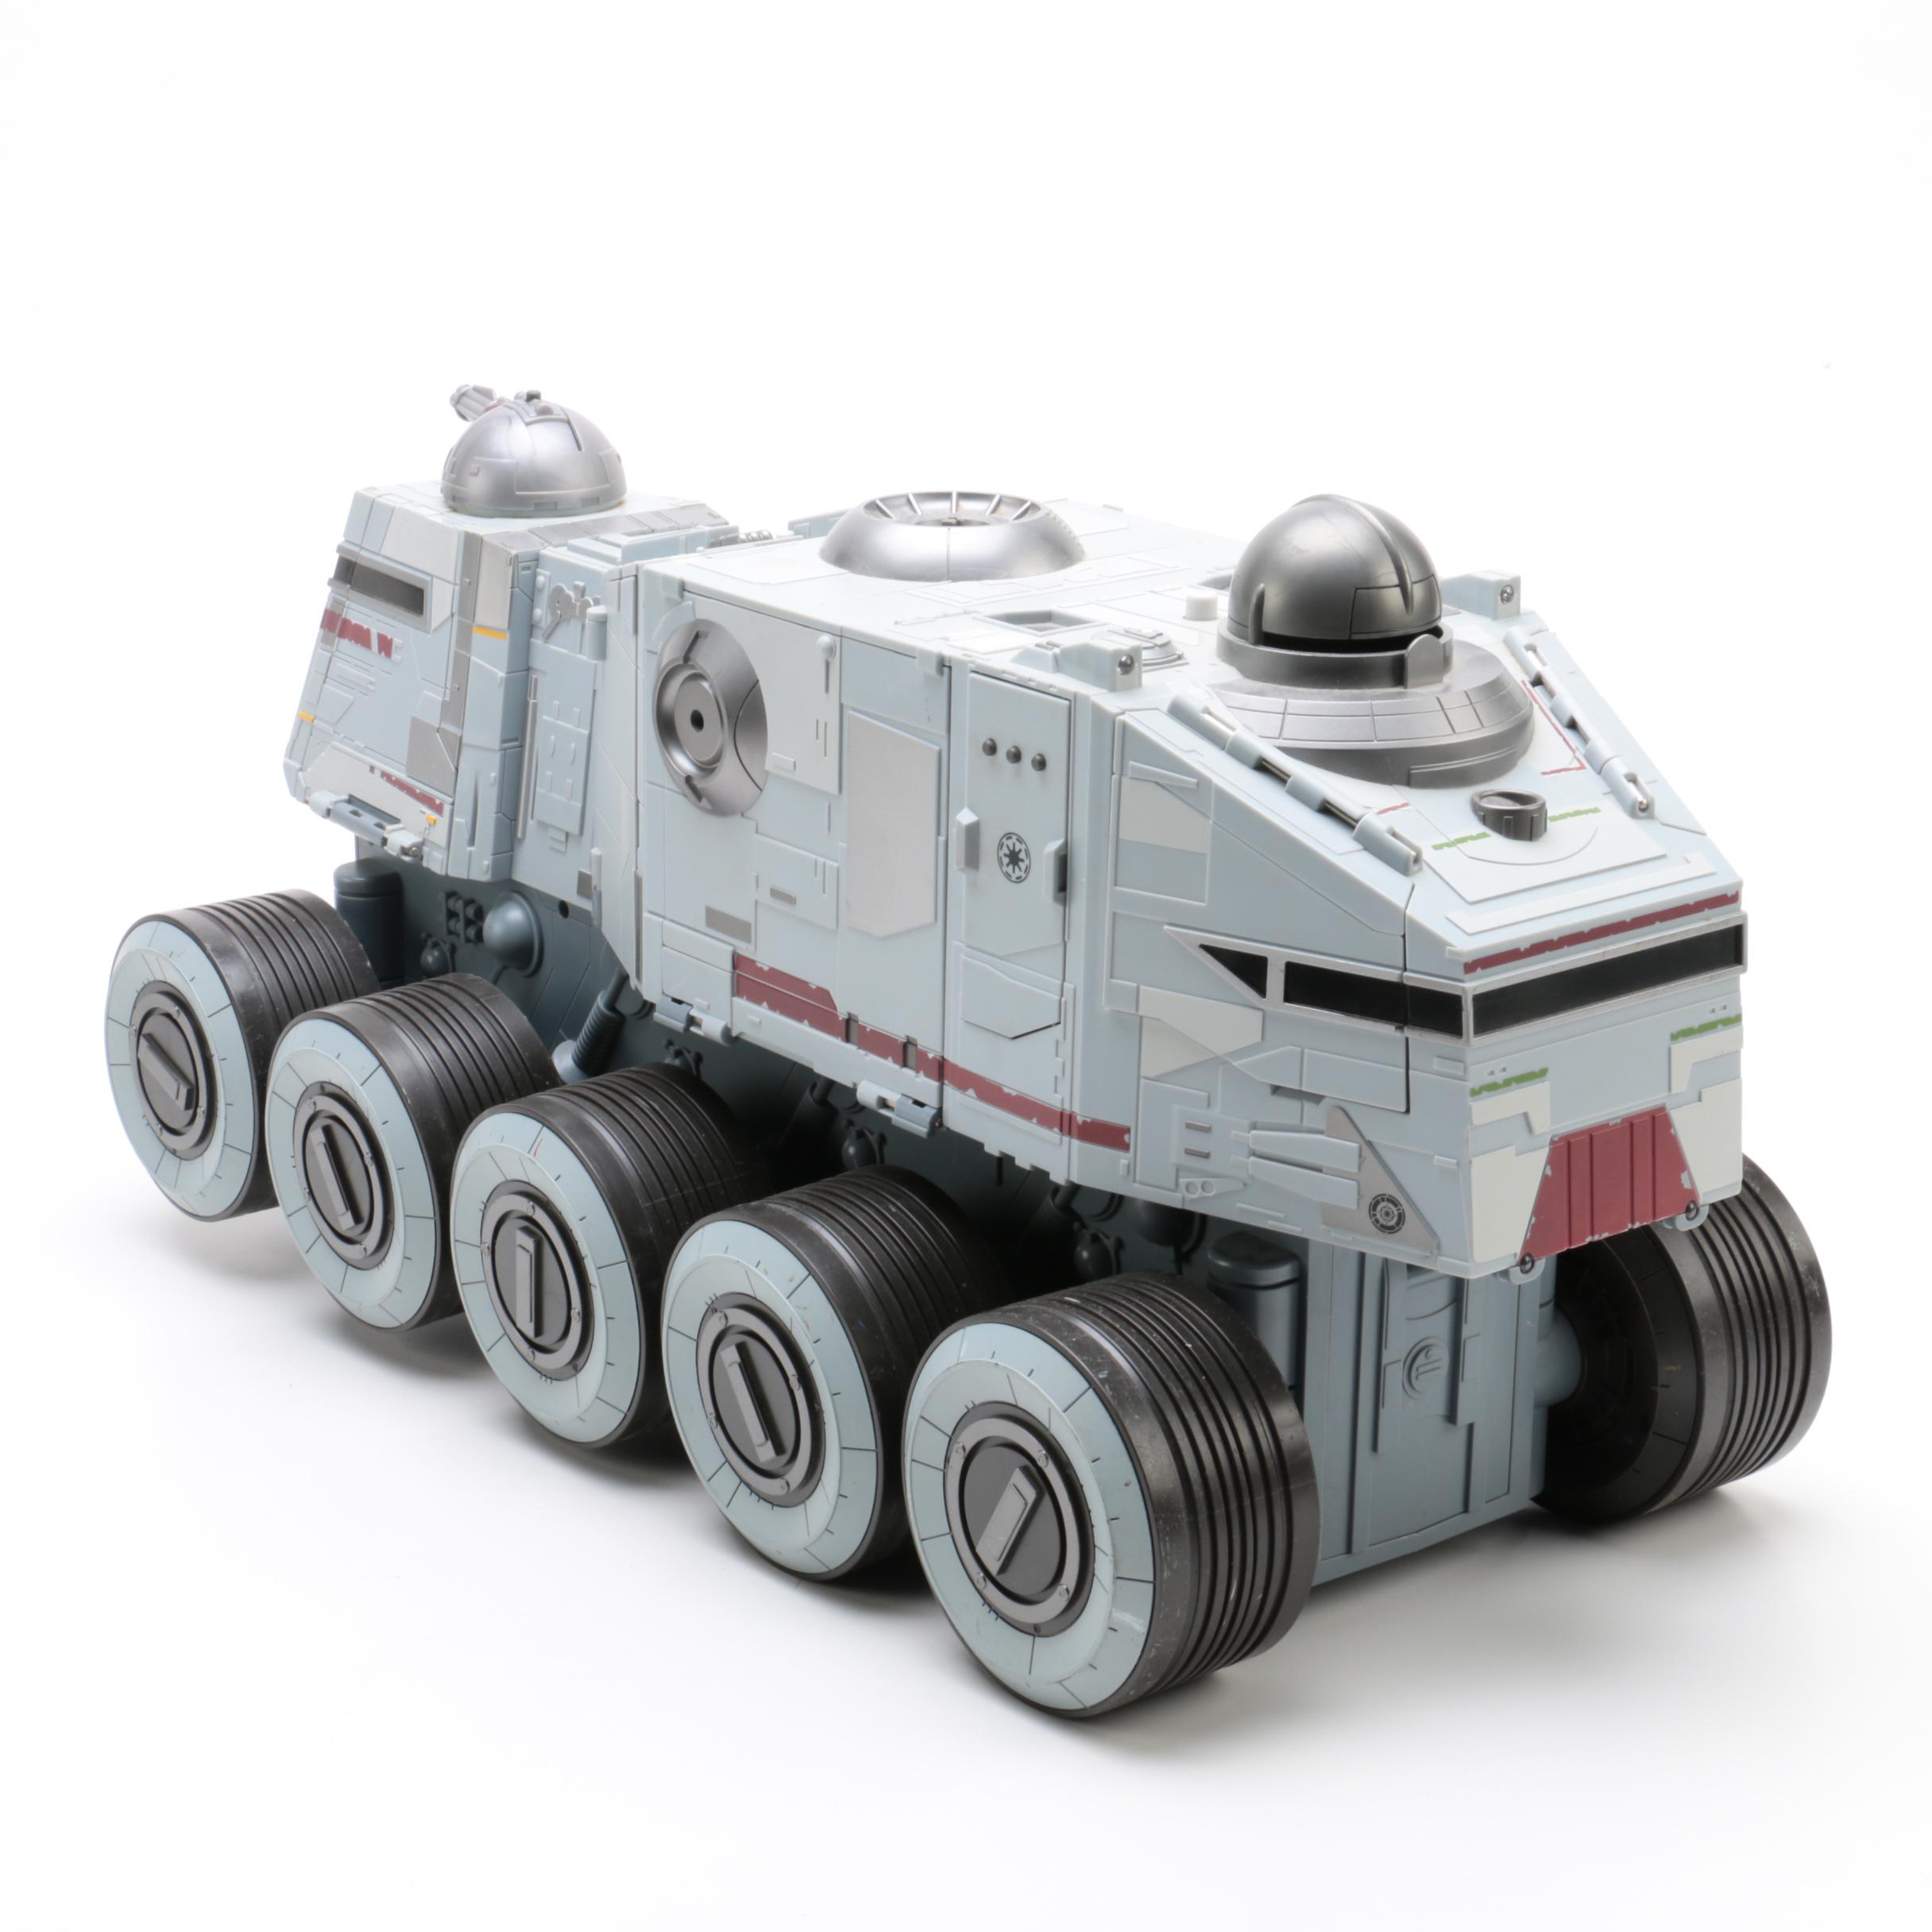 star wars turbo tank toy